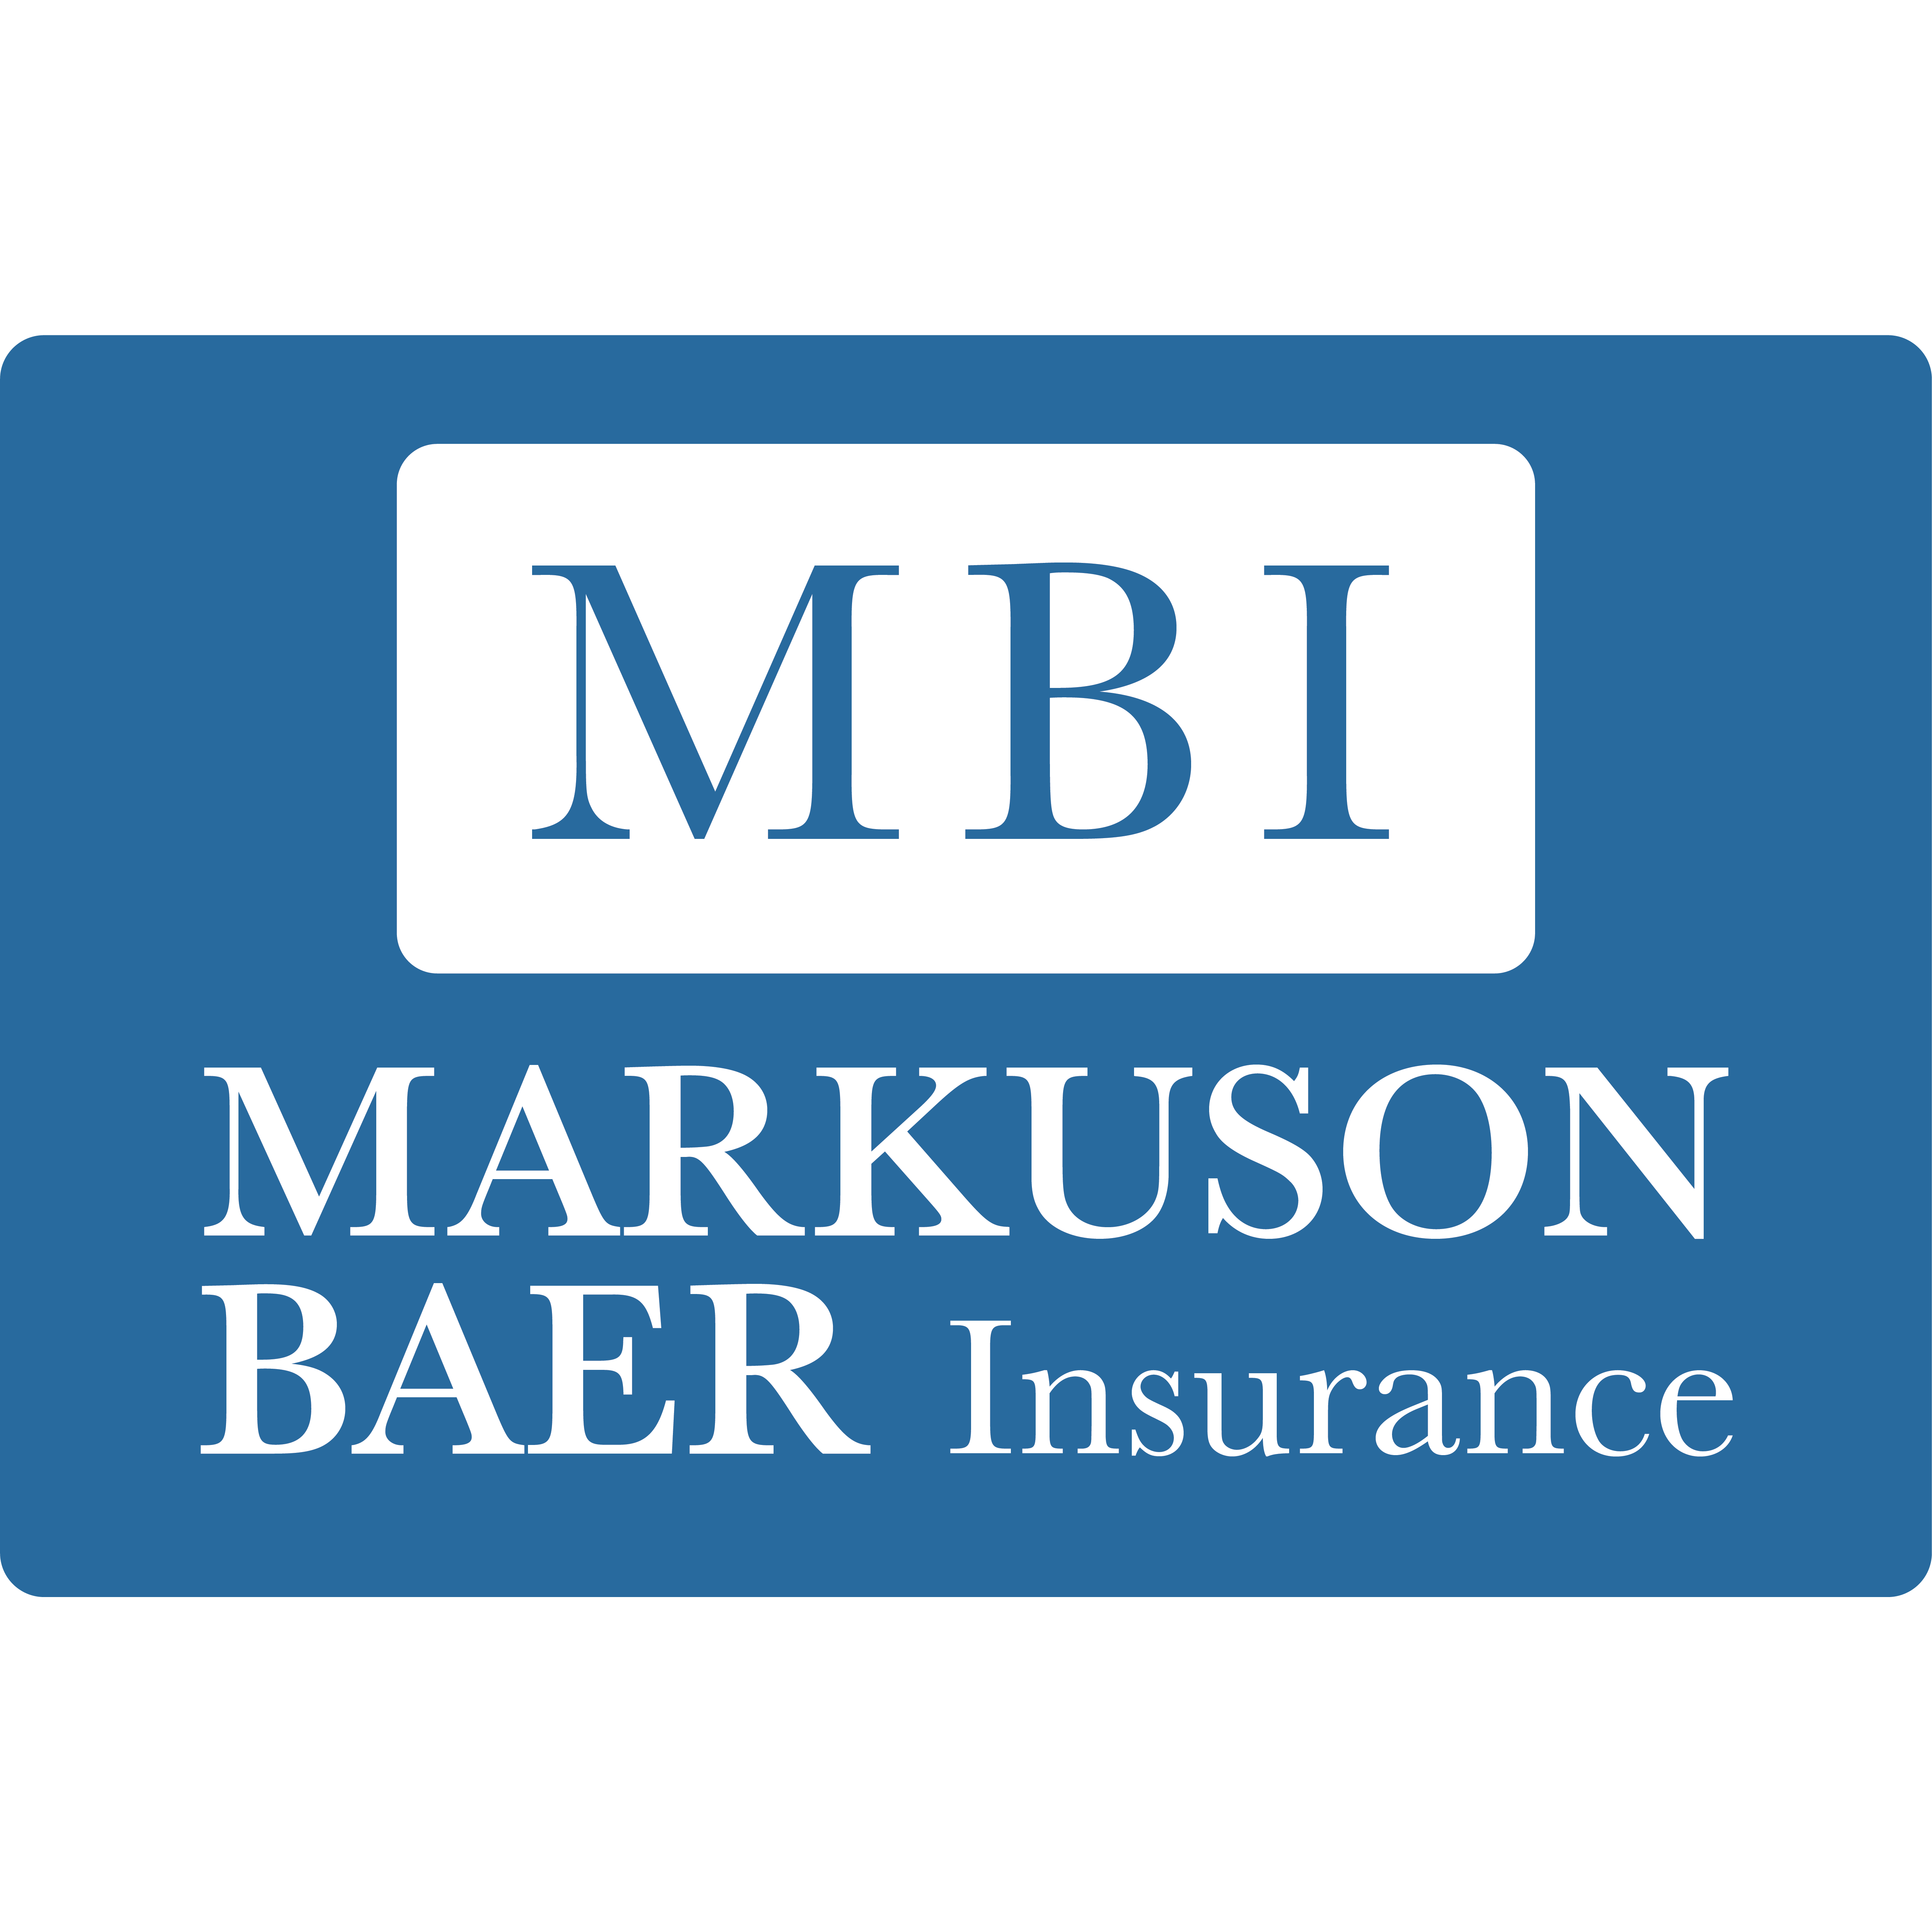 MARKUSON BAER Insurance - Detroit Lakes, MN 56501 - (218)846-1304 | ShowMeLocal.com